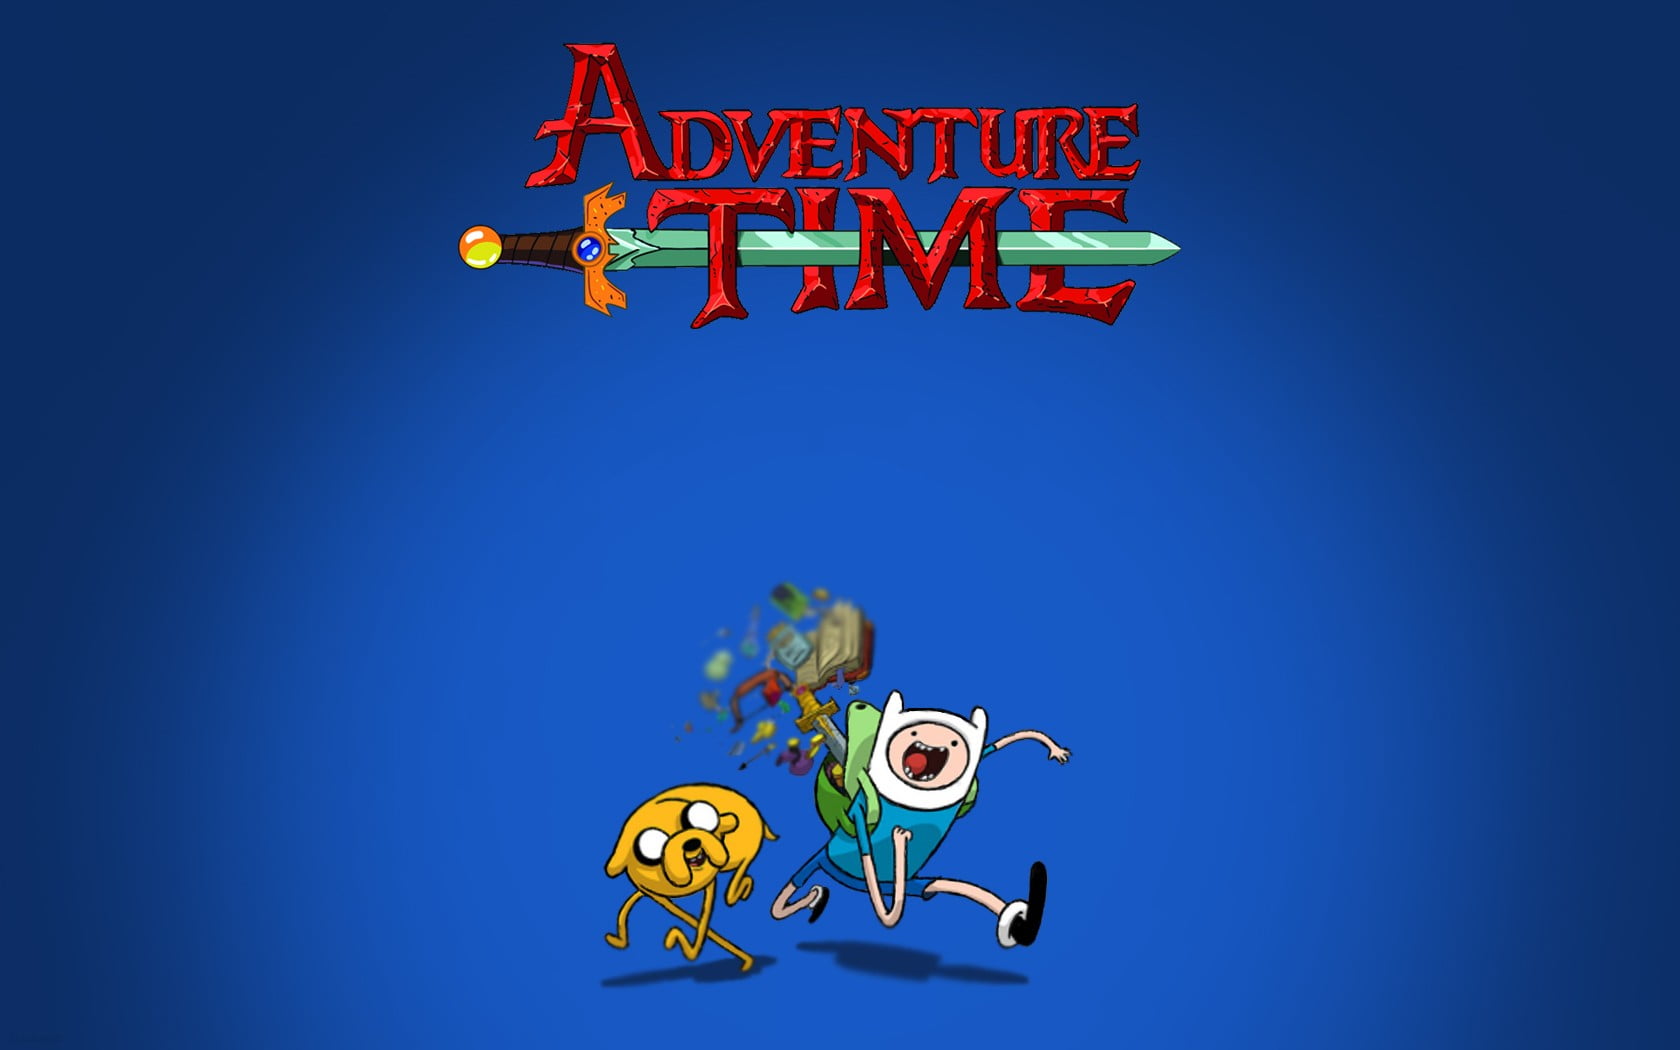 Adventure Time wallpaper, Adventure Time, Finn the Human, Jake the Dog